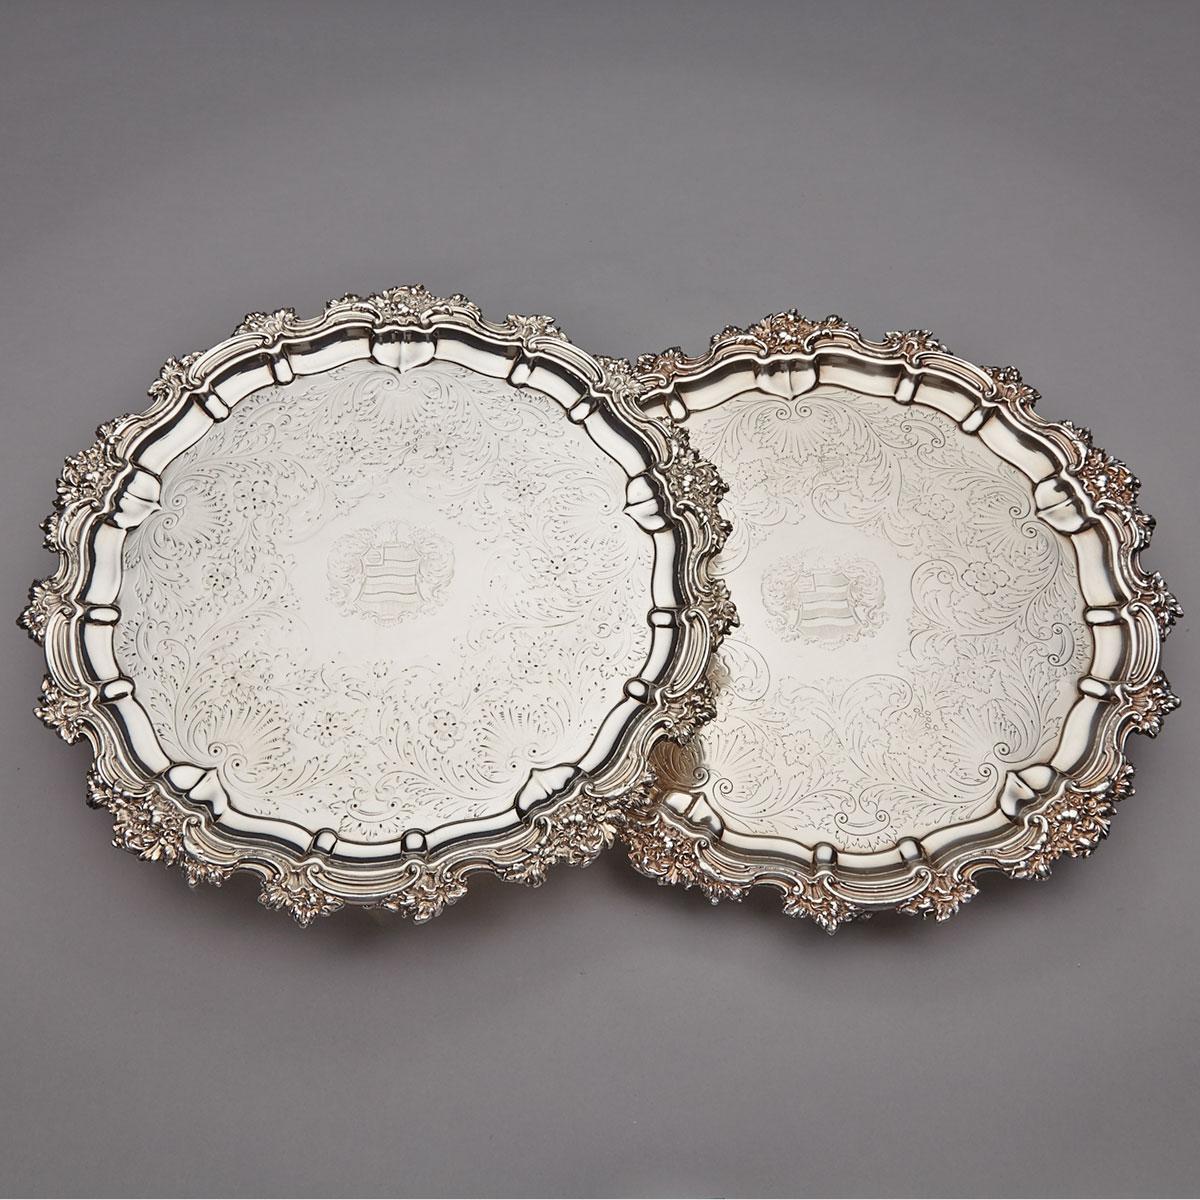 Pair of Old Sheffield Plate Circular Salvers, c.1825-30